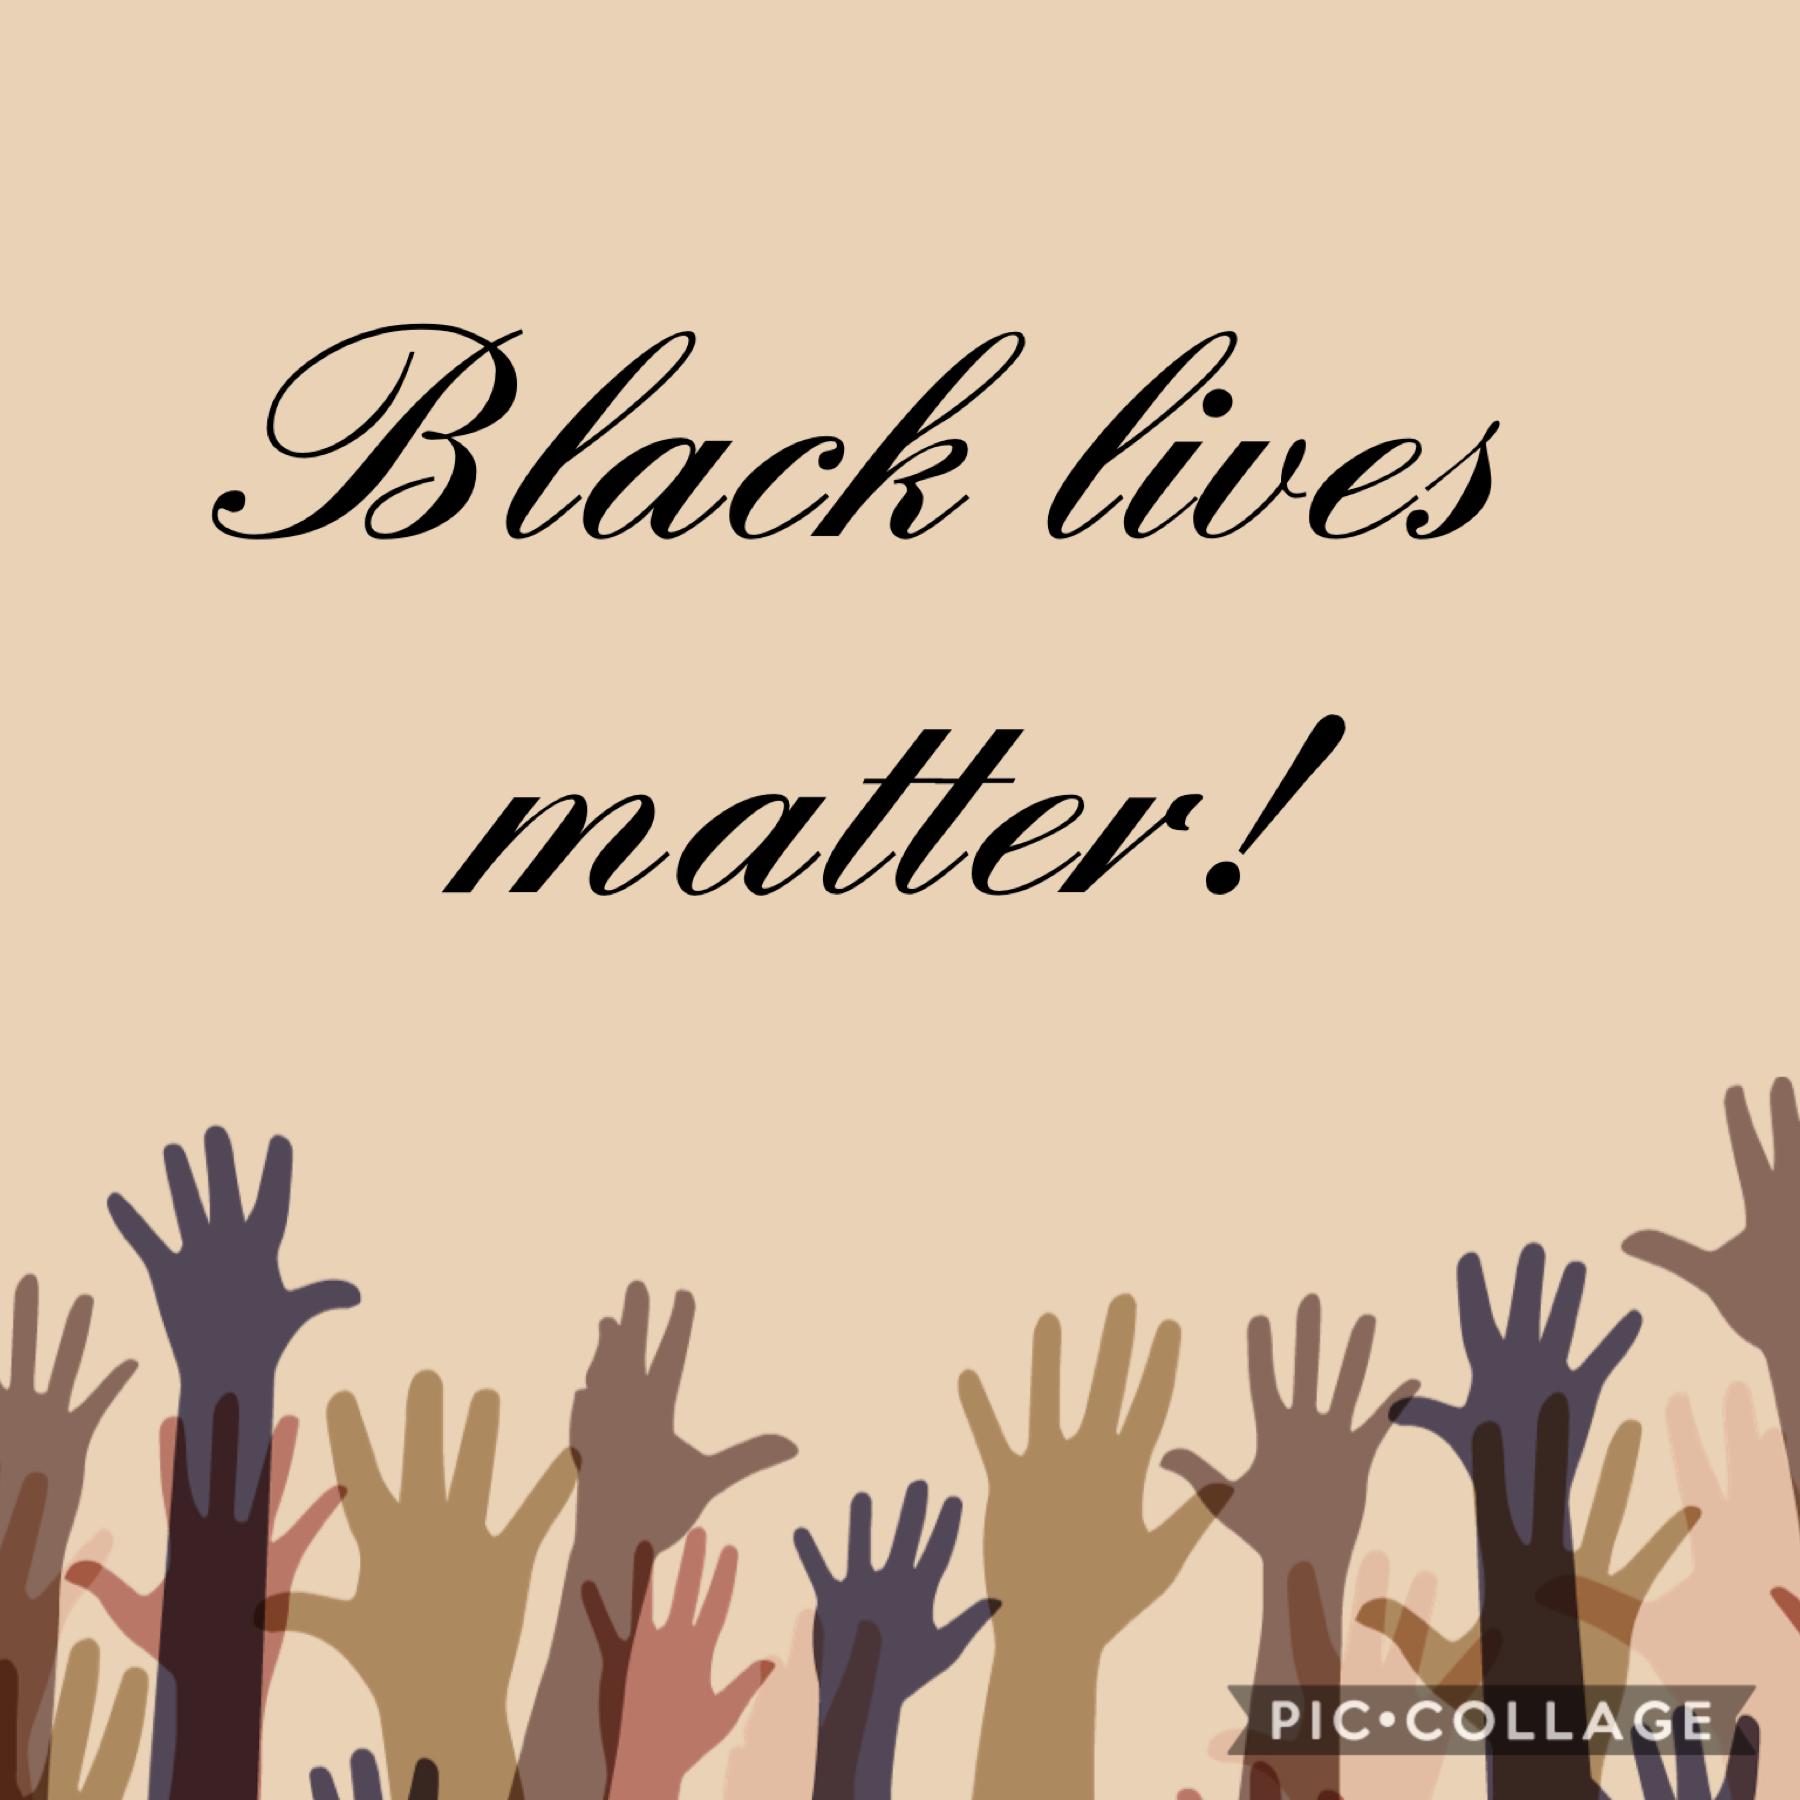 Blacks lives matter a lot to me, 